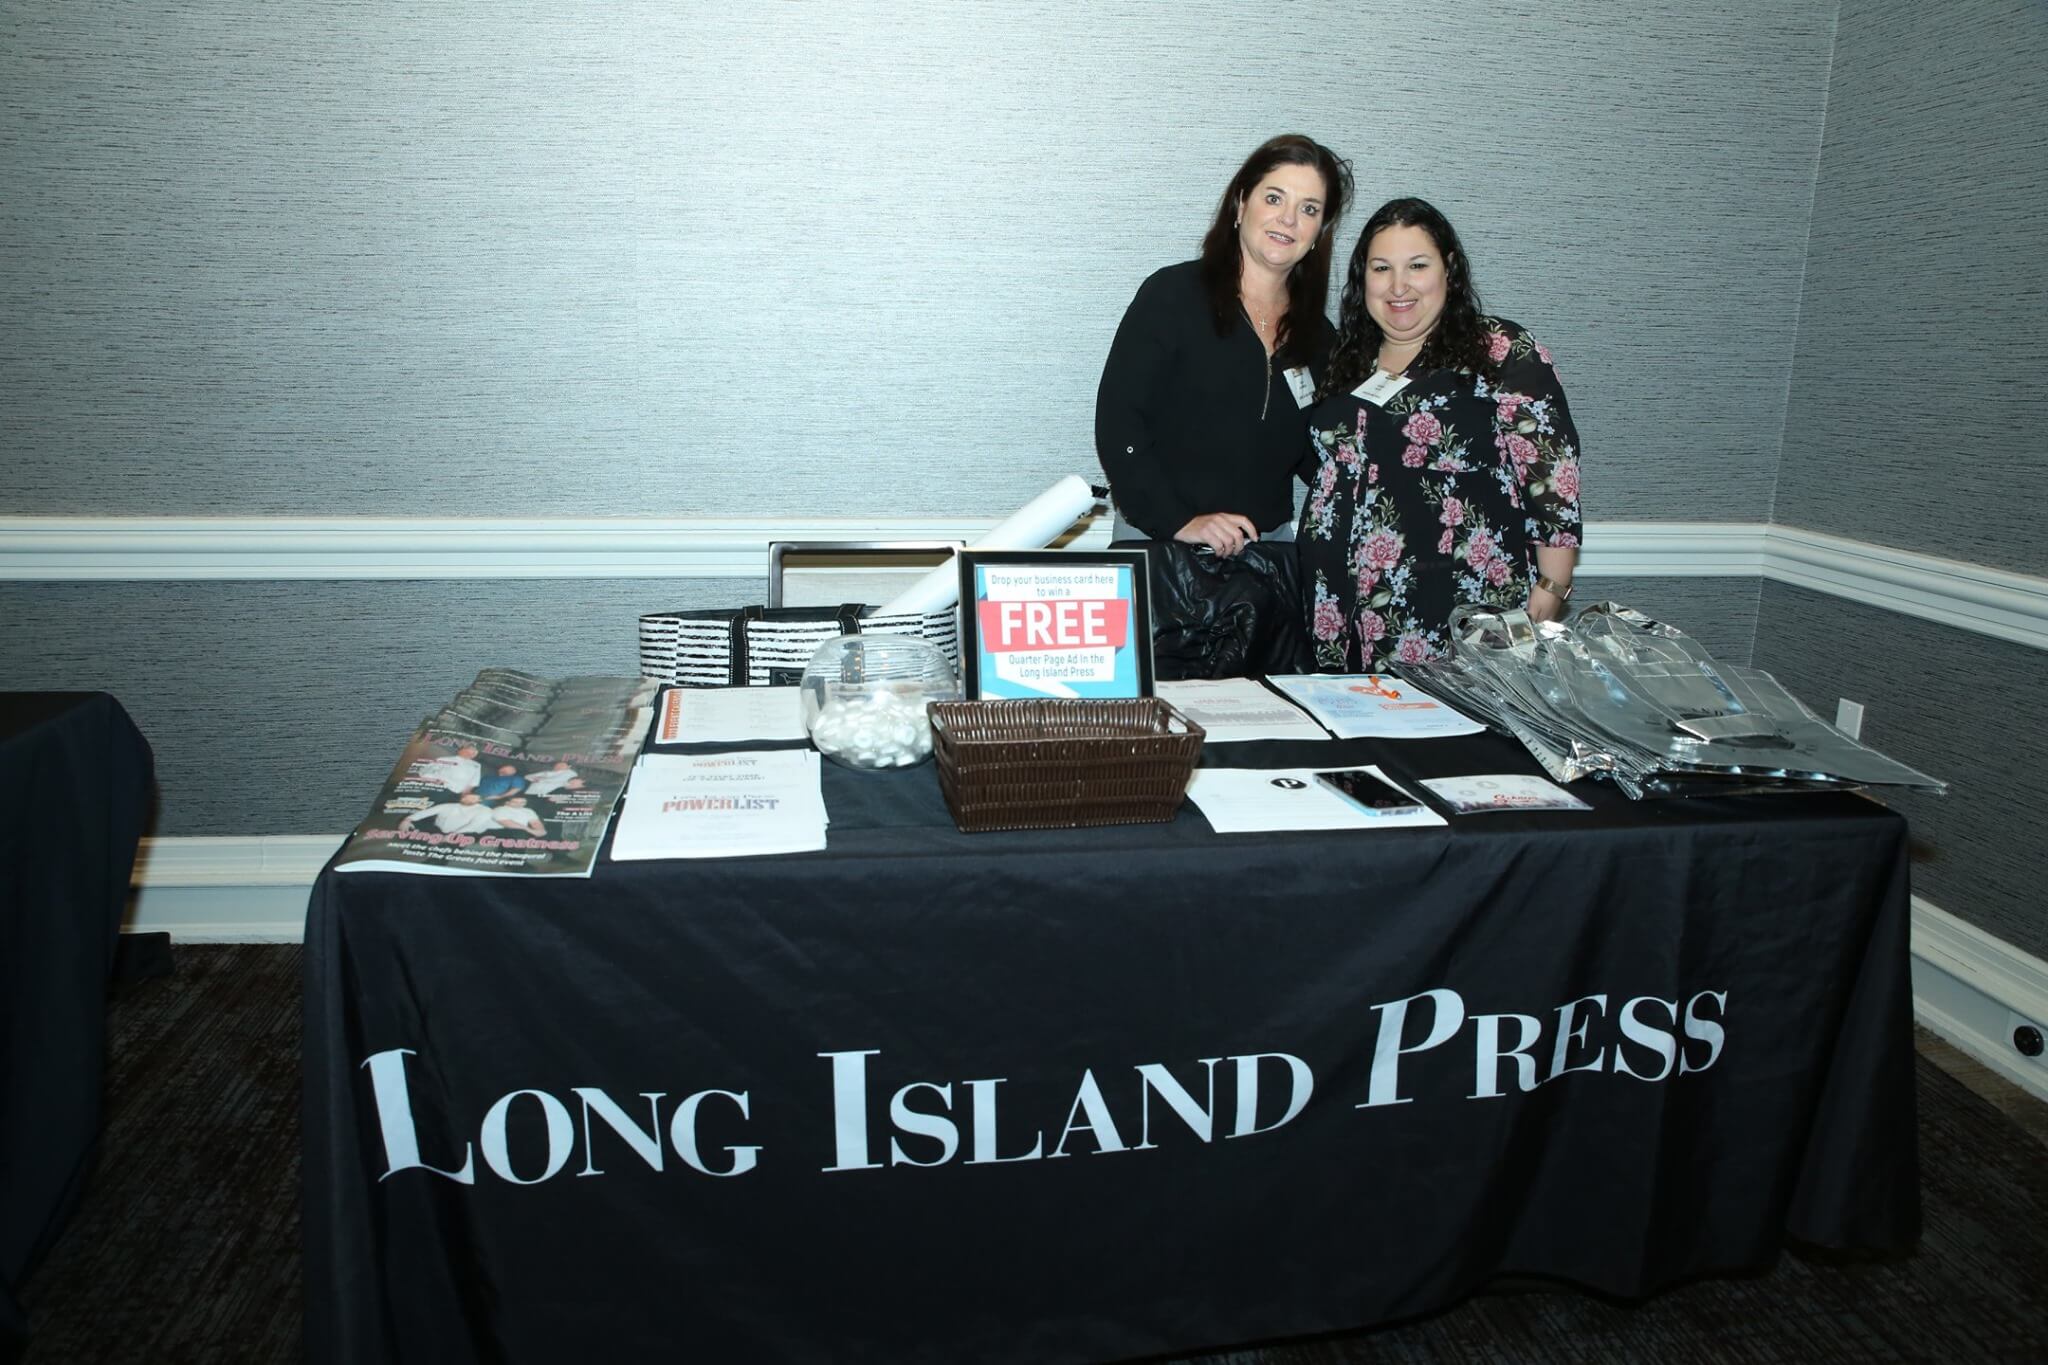 2 people at long island press table